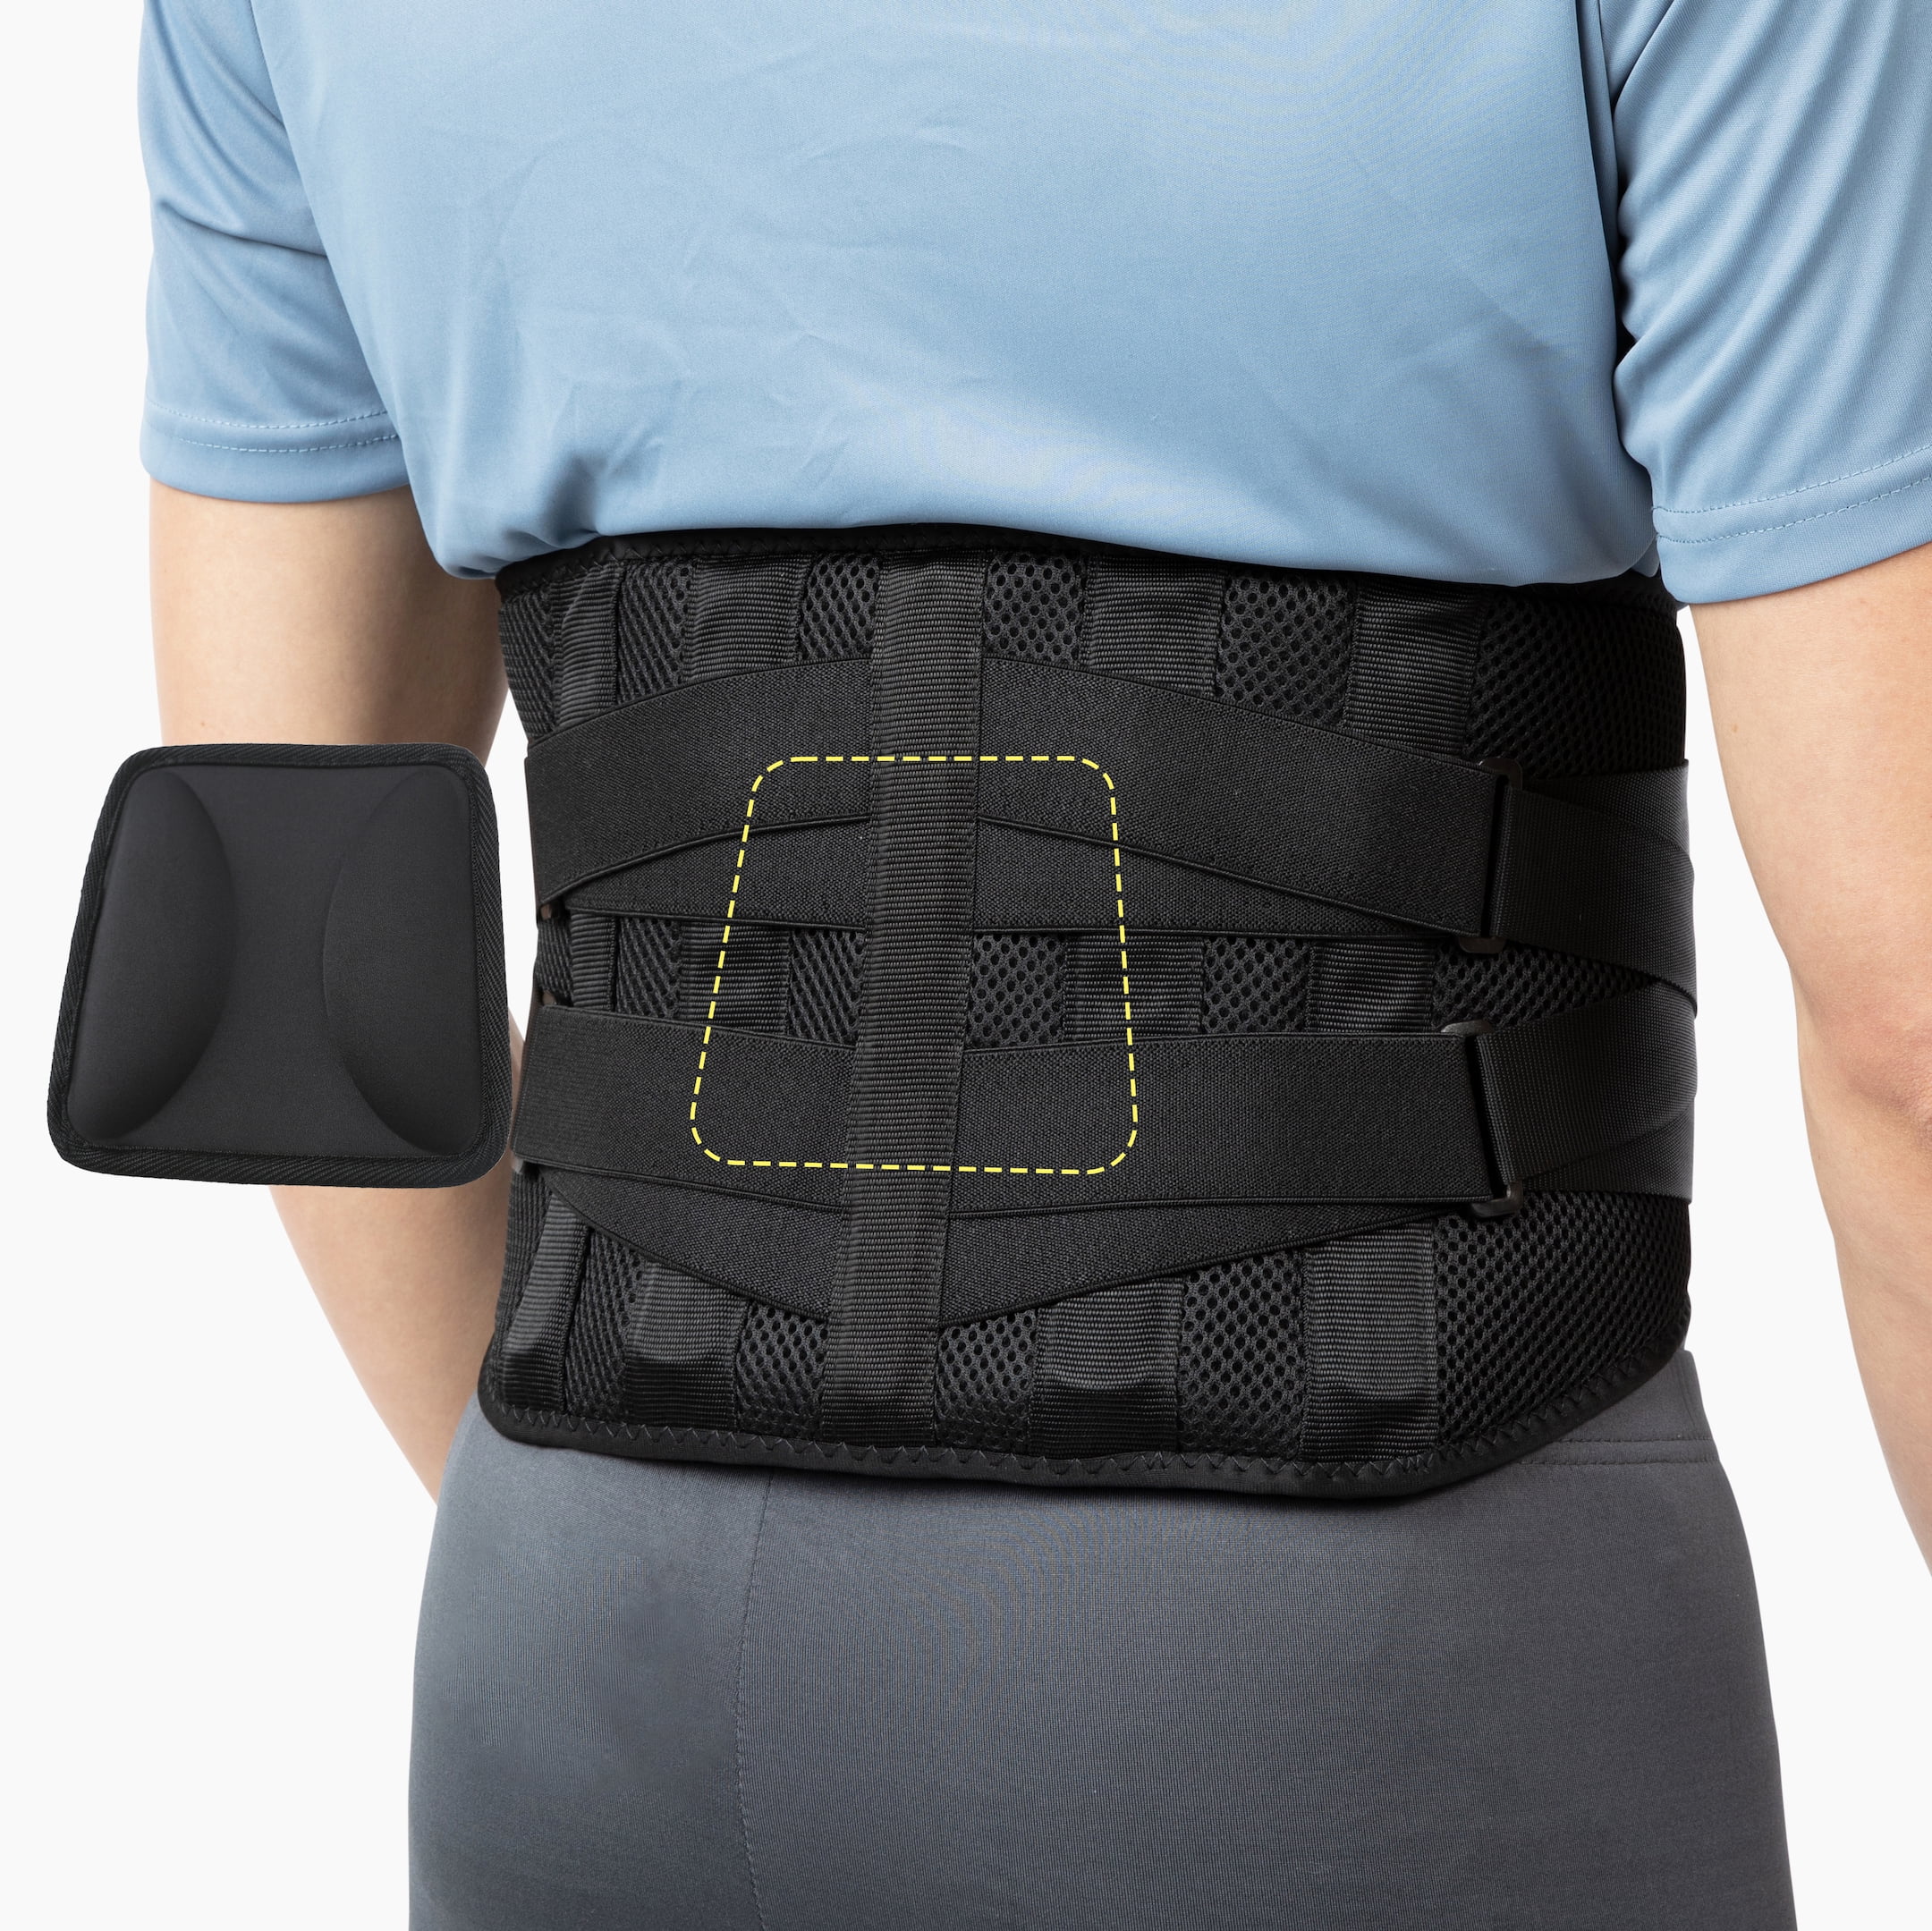 Back Braces for Lower Back Relief Breathable Back Support Belt for